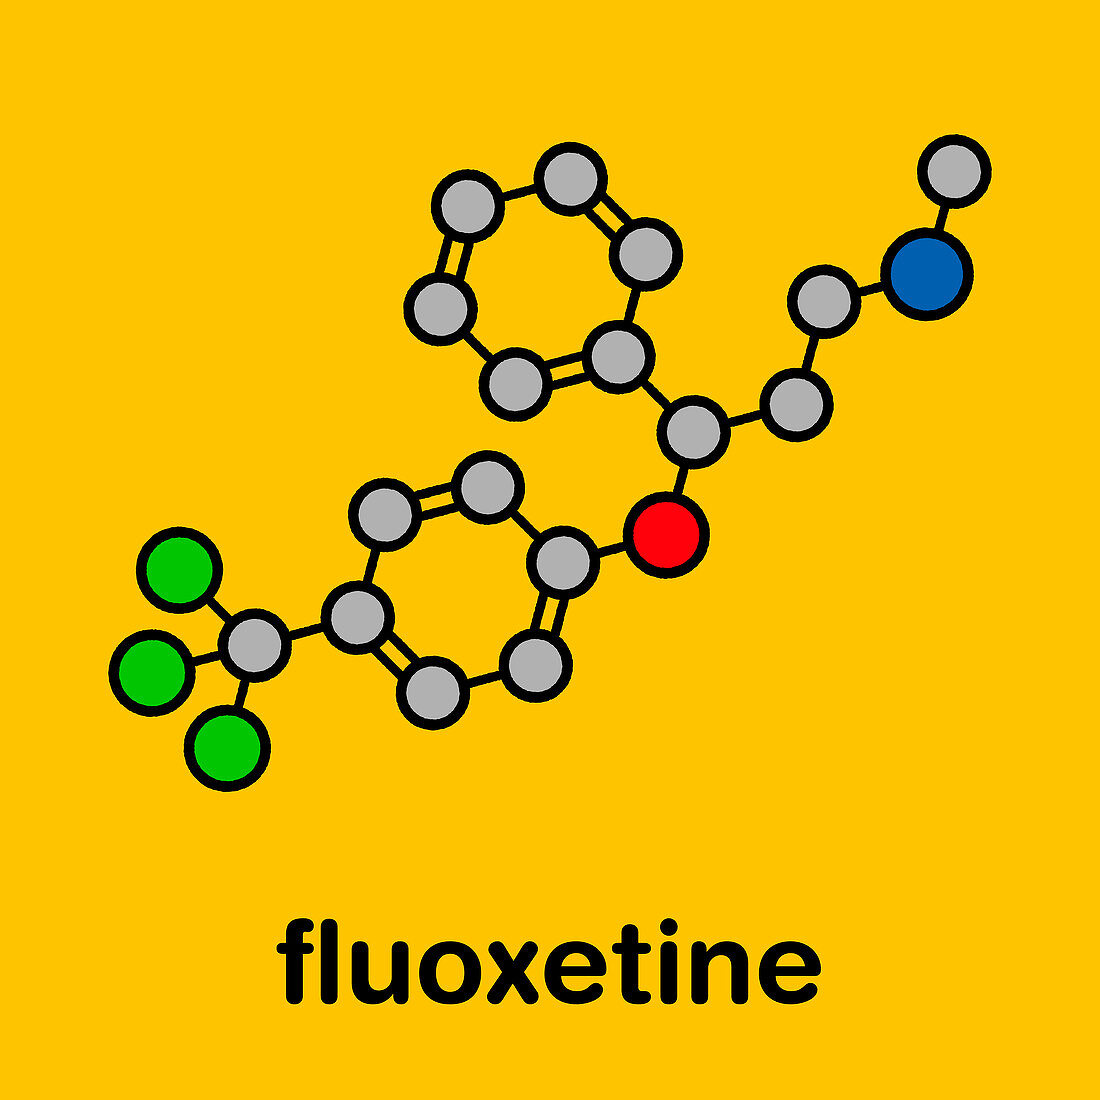 Fluoxetine antidepressant drug